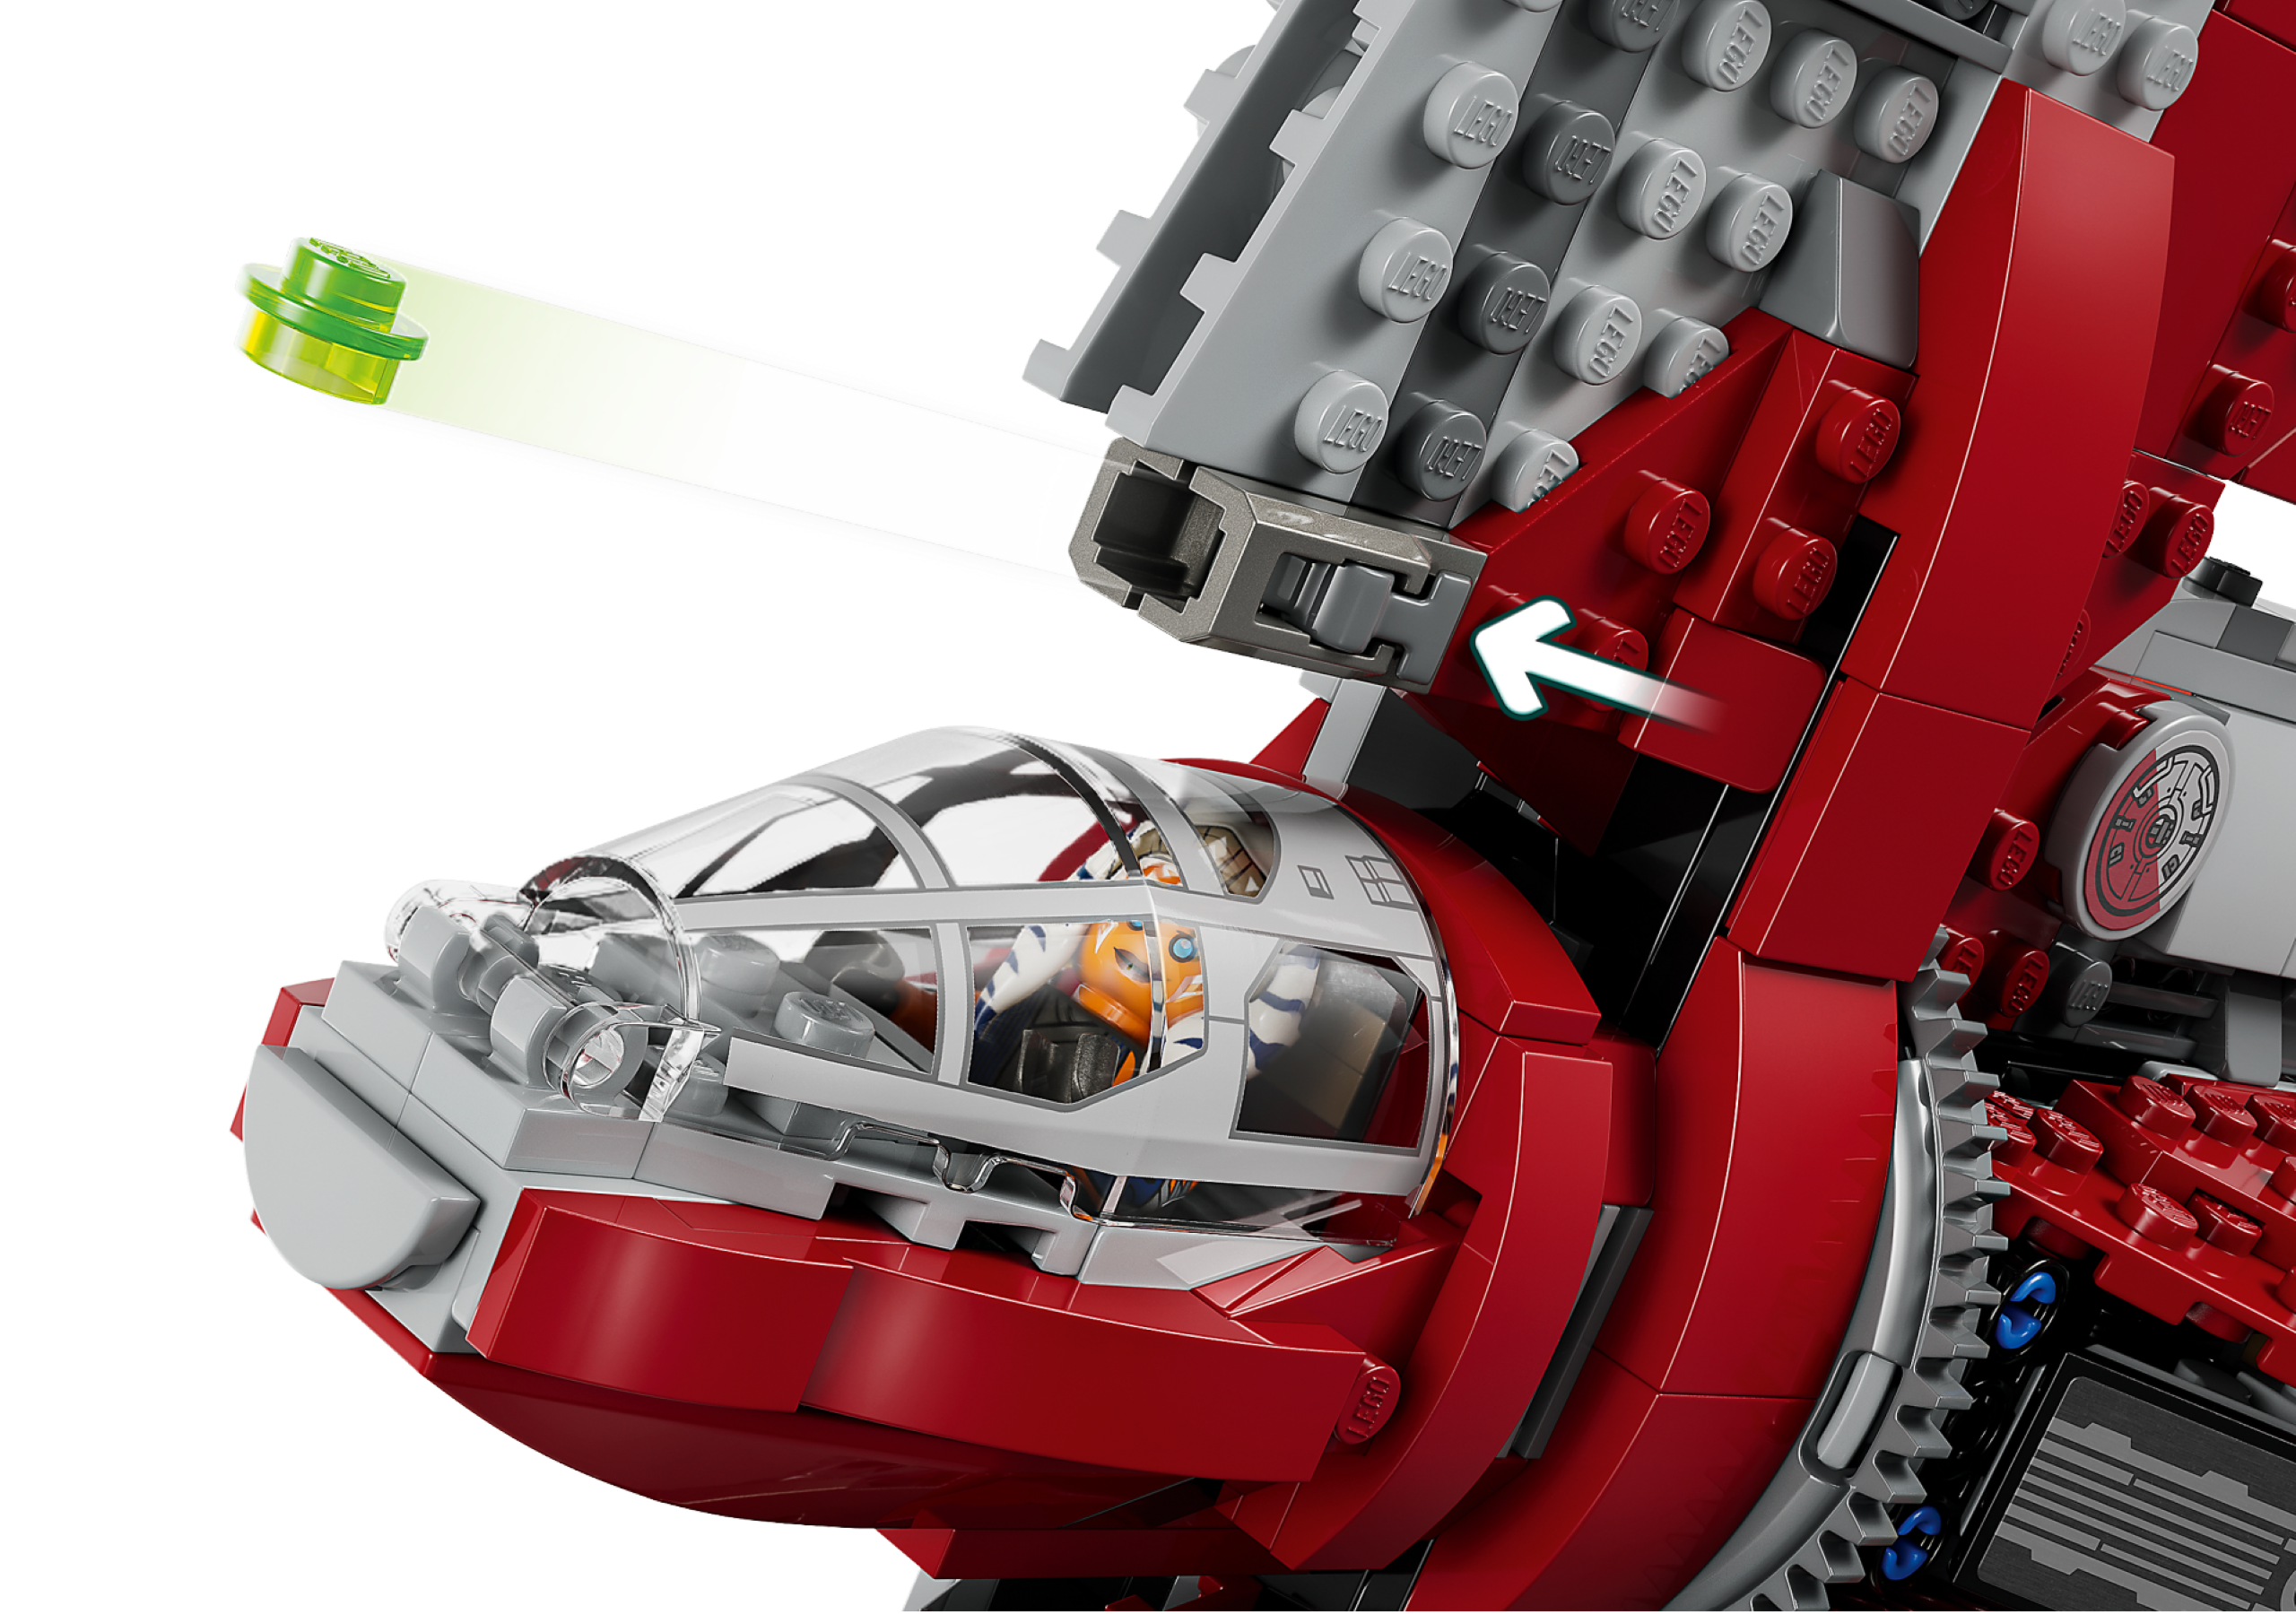 LEGO MOC Ahsoka Tano's T-6 Jedi Shuttle set 75362 MOD by